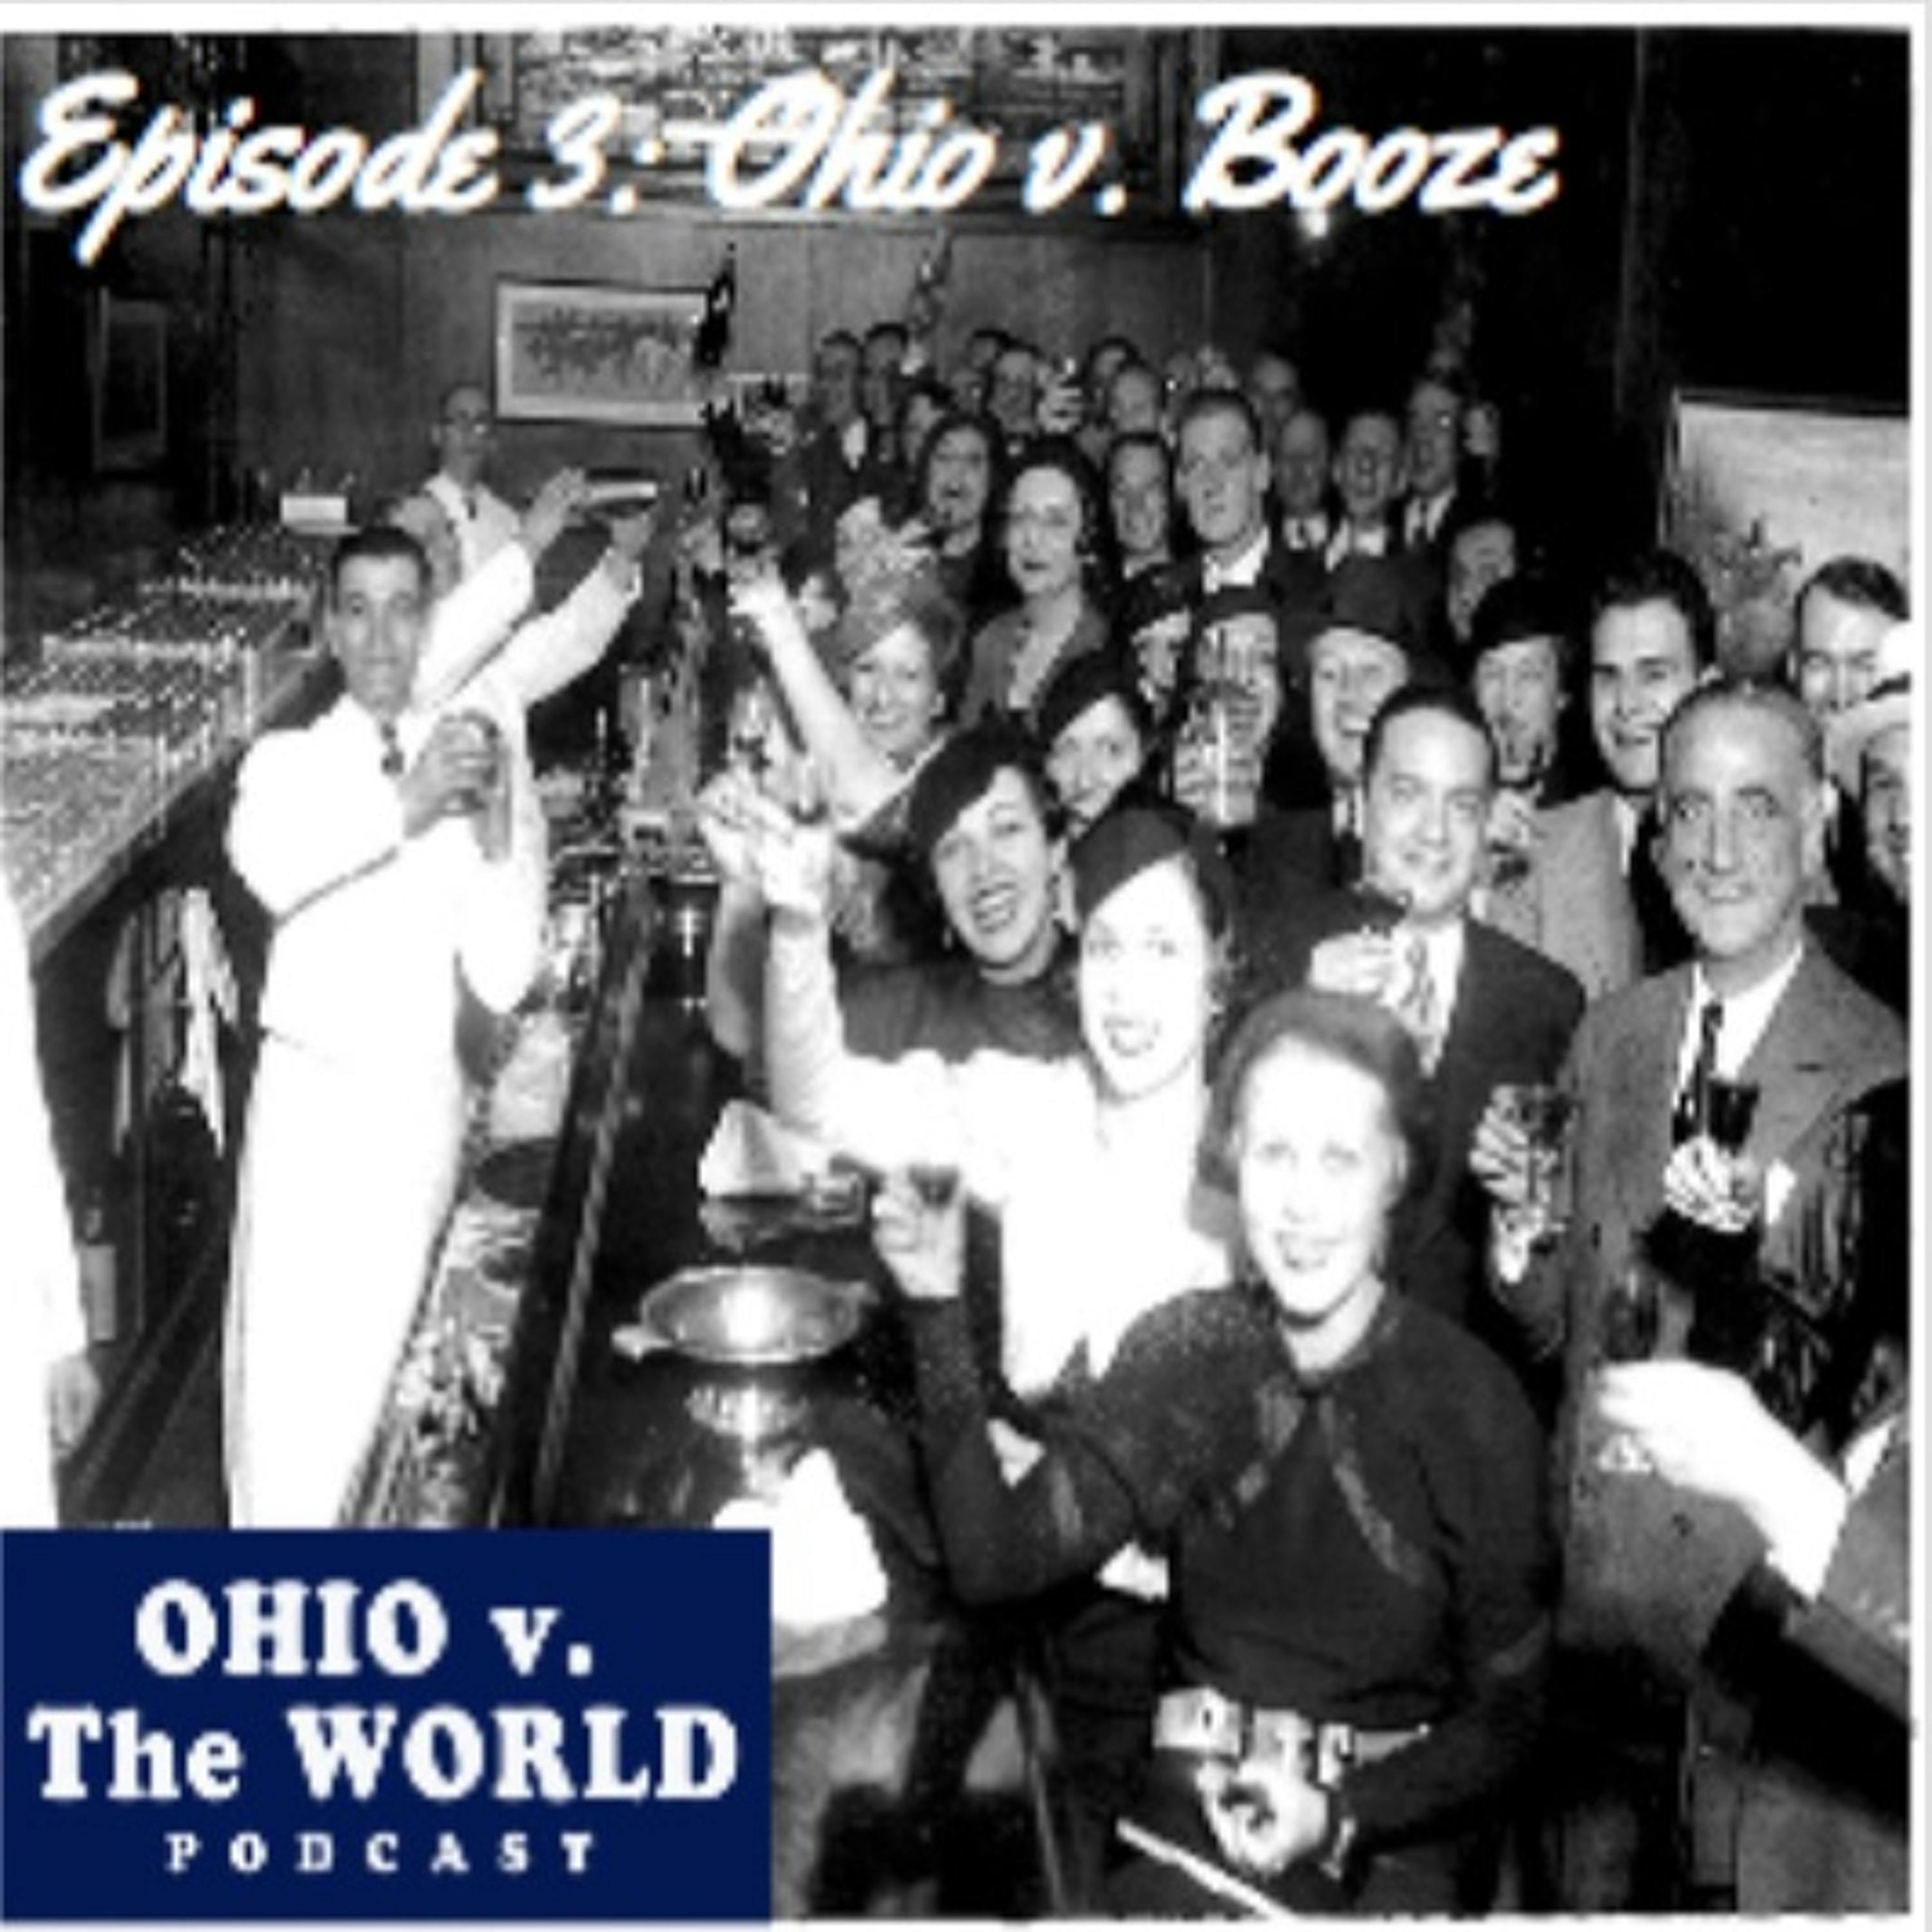 Ohio v. Booze (Prohibition and the Anti-Saloon League)